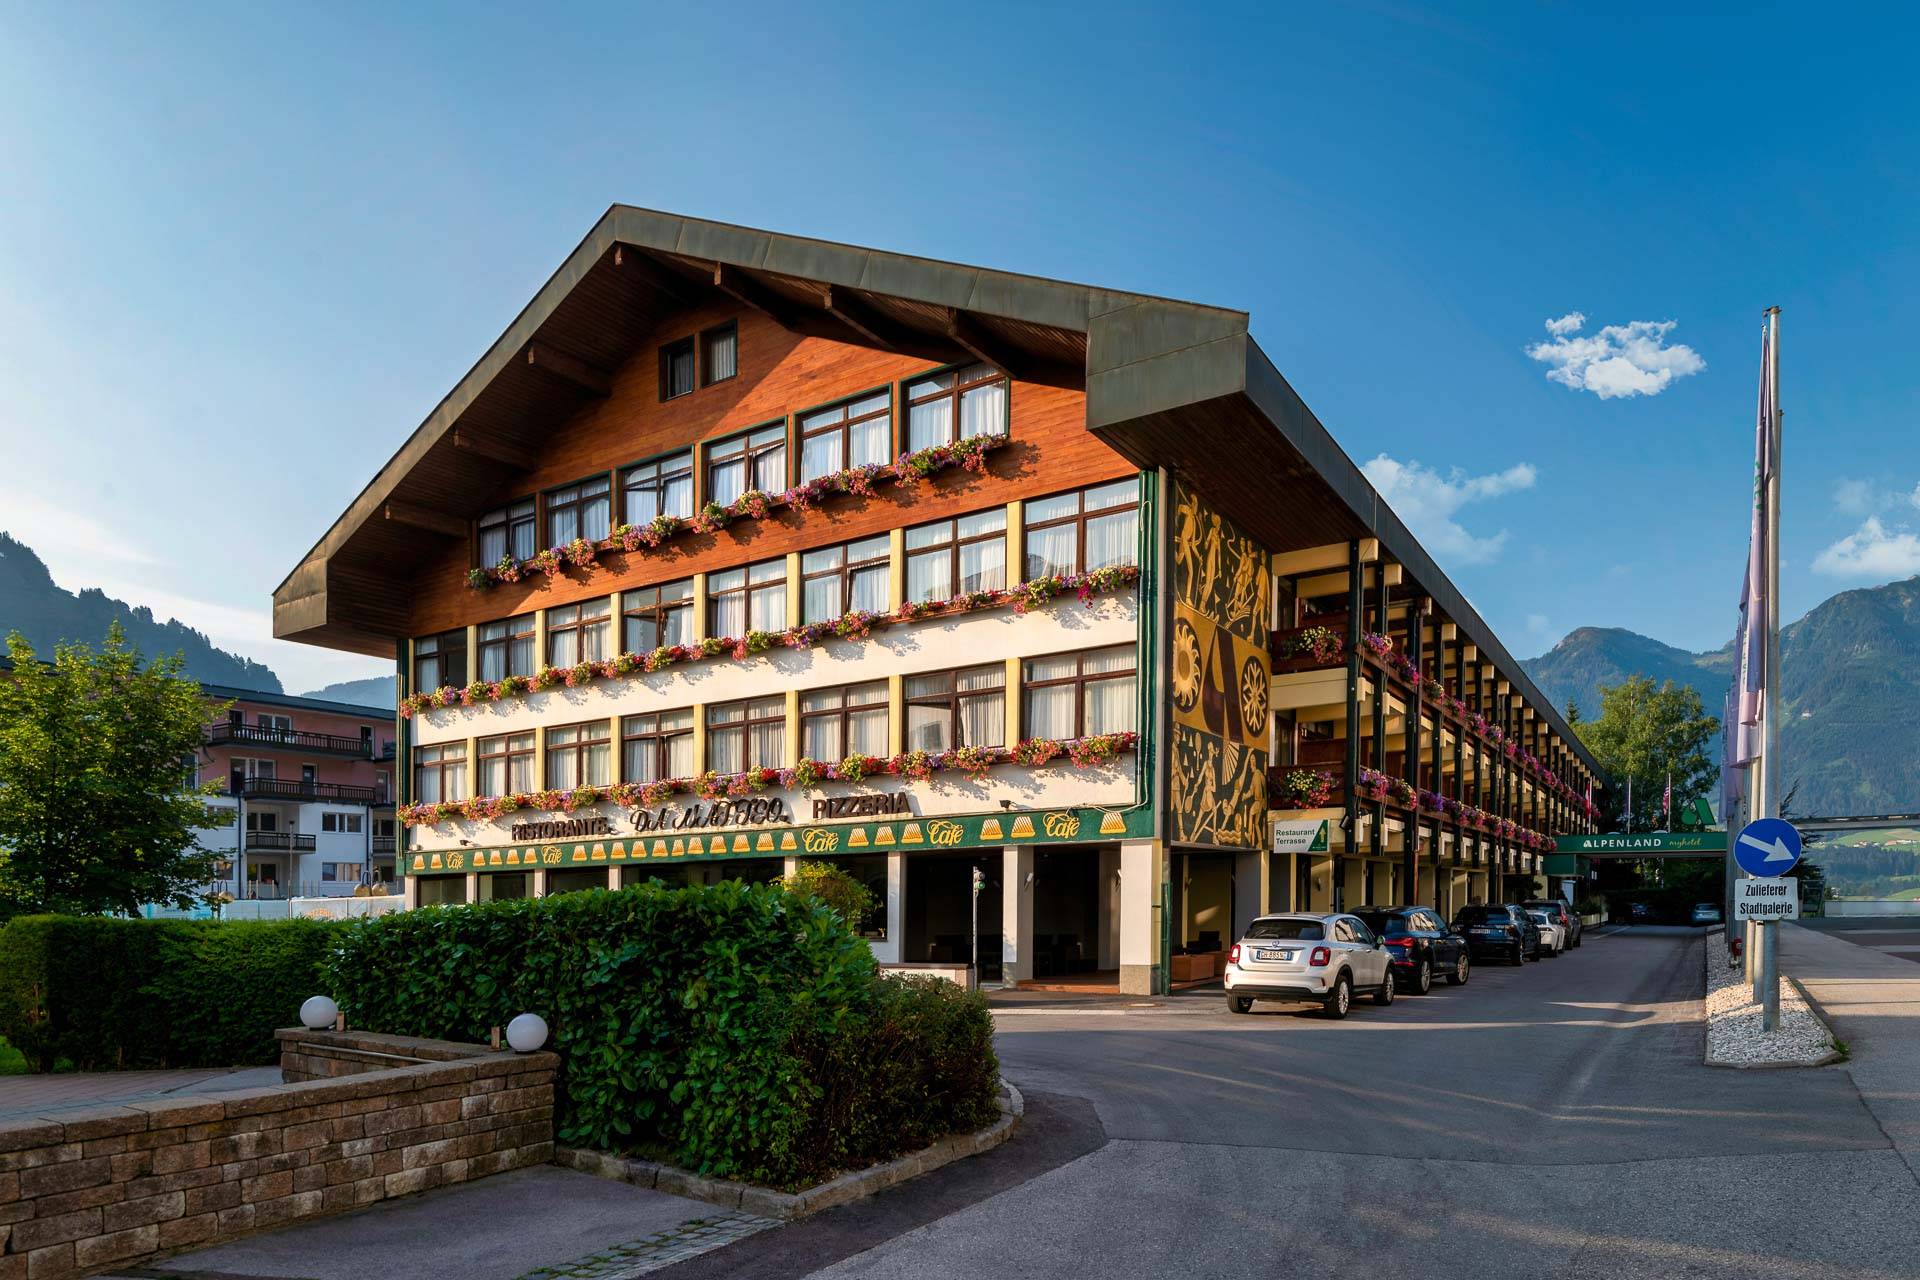 Hotel Alpenland in St. Johann im Pongau